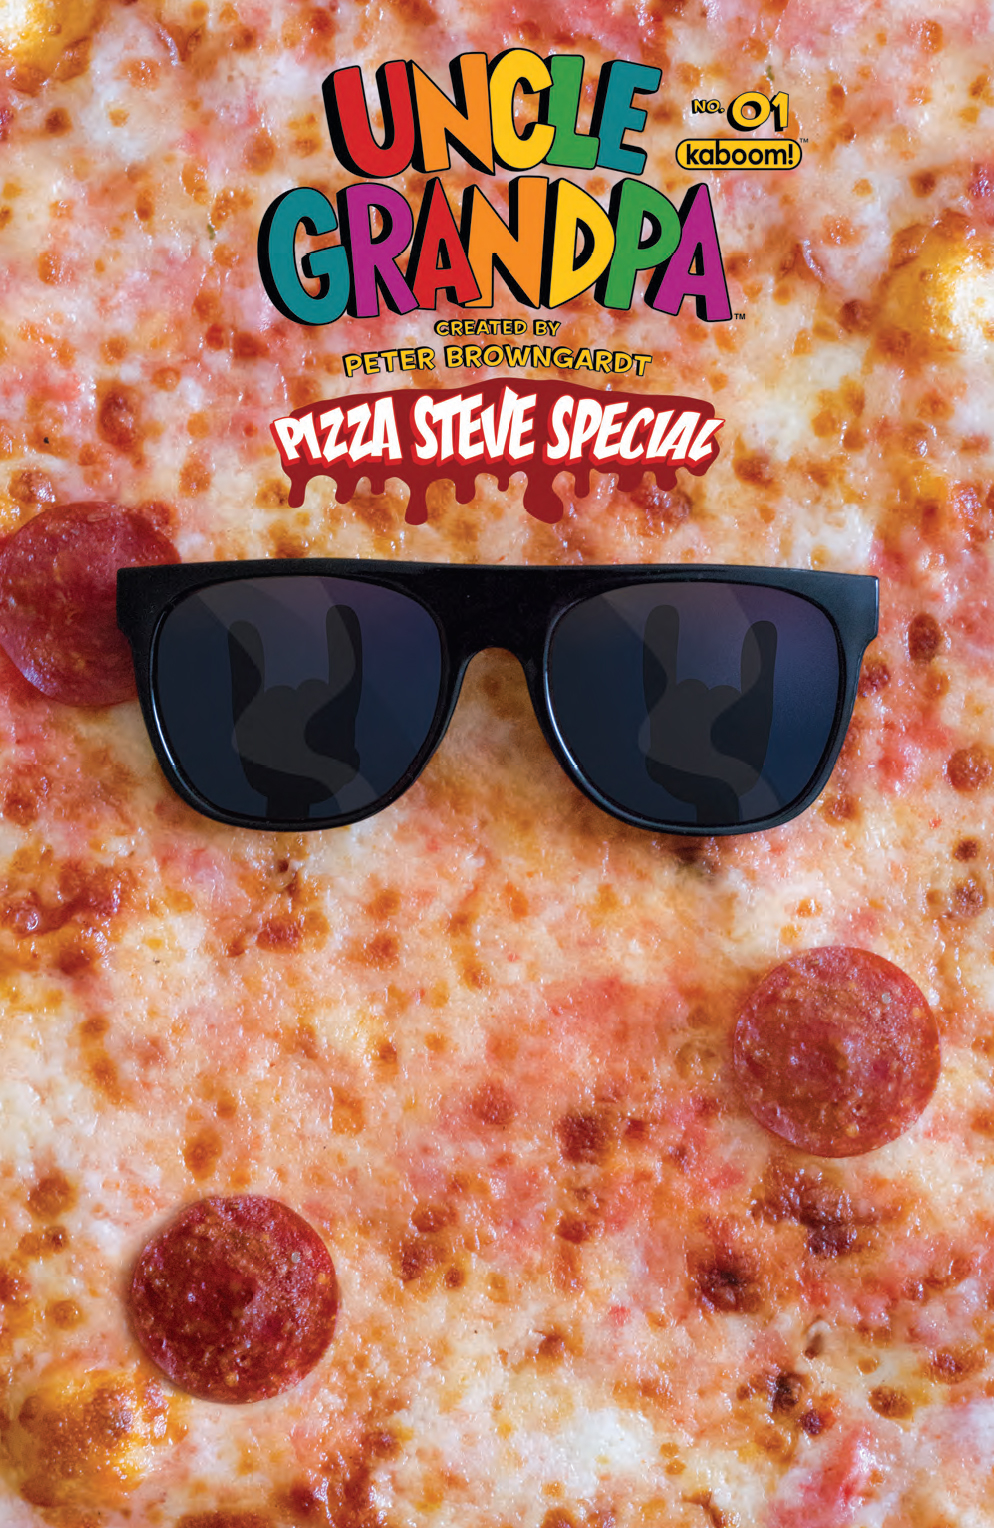 UNCLE GRANDPA PIZZA STEVE SPECIAL #1